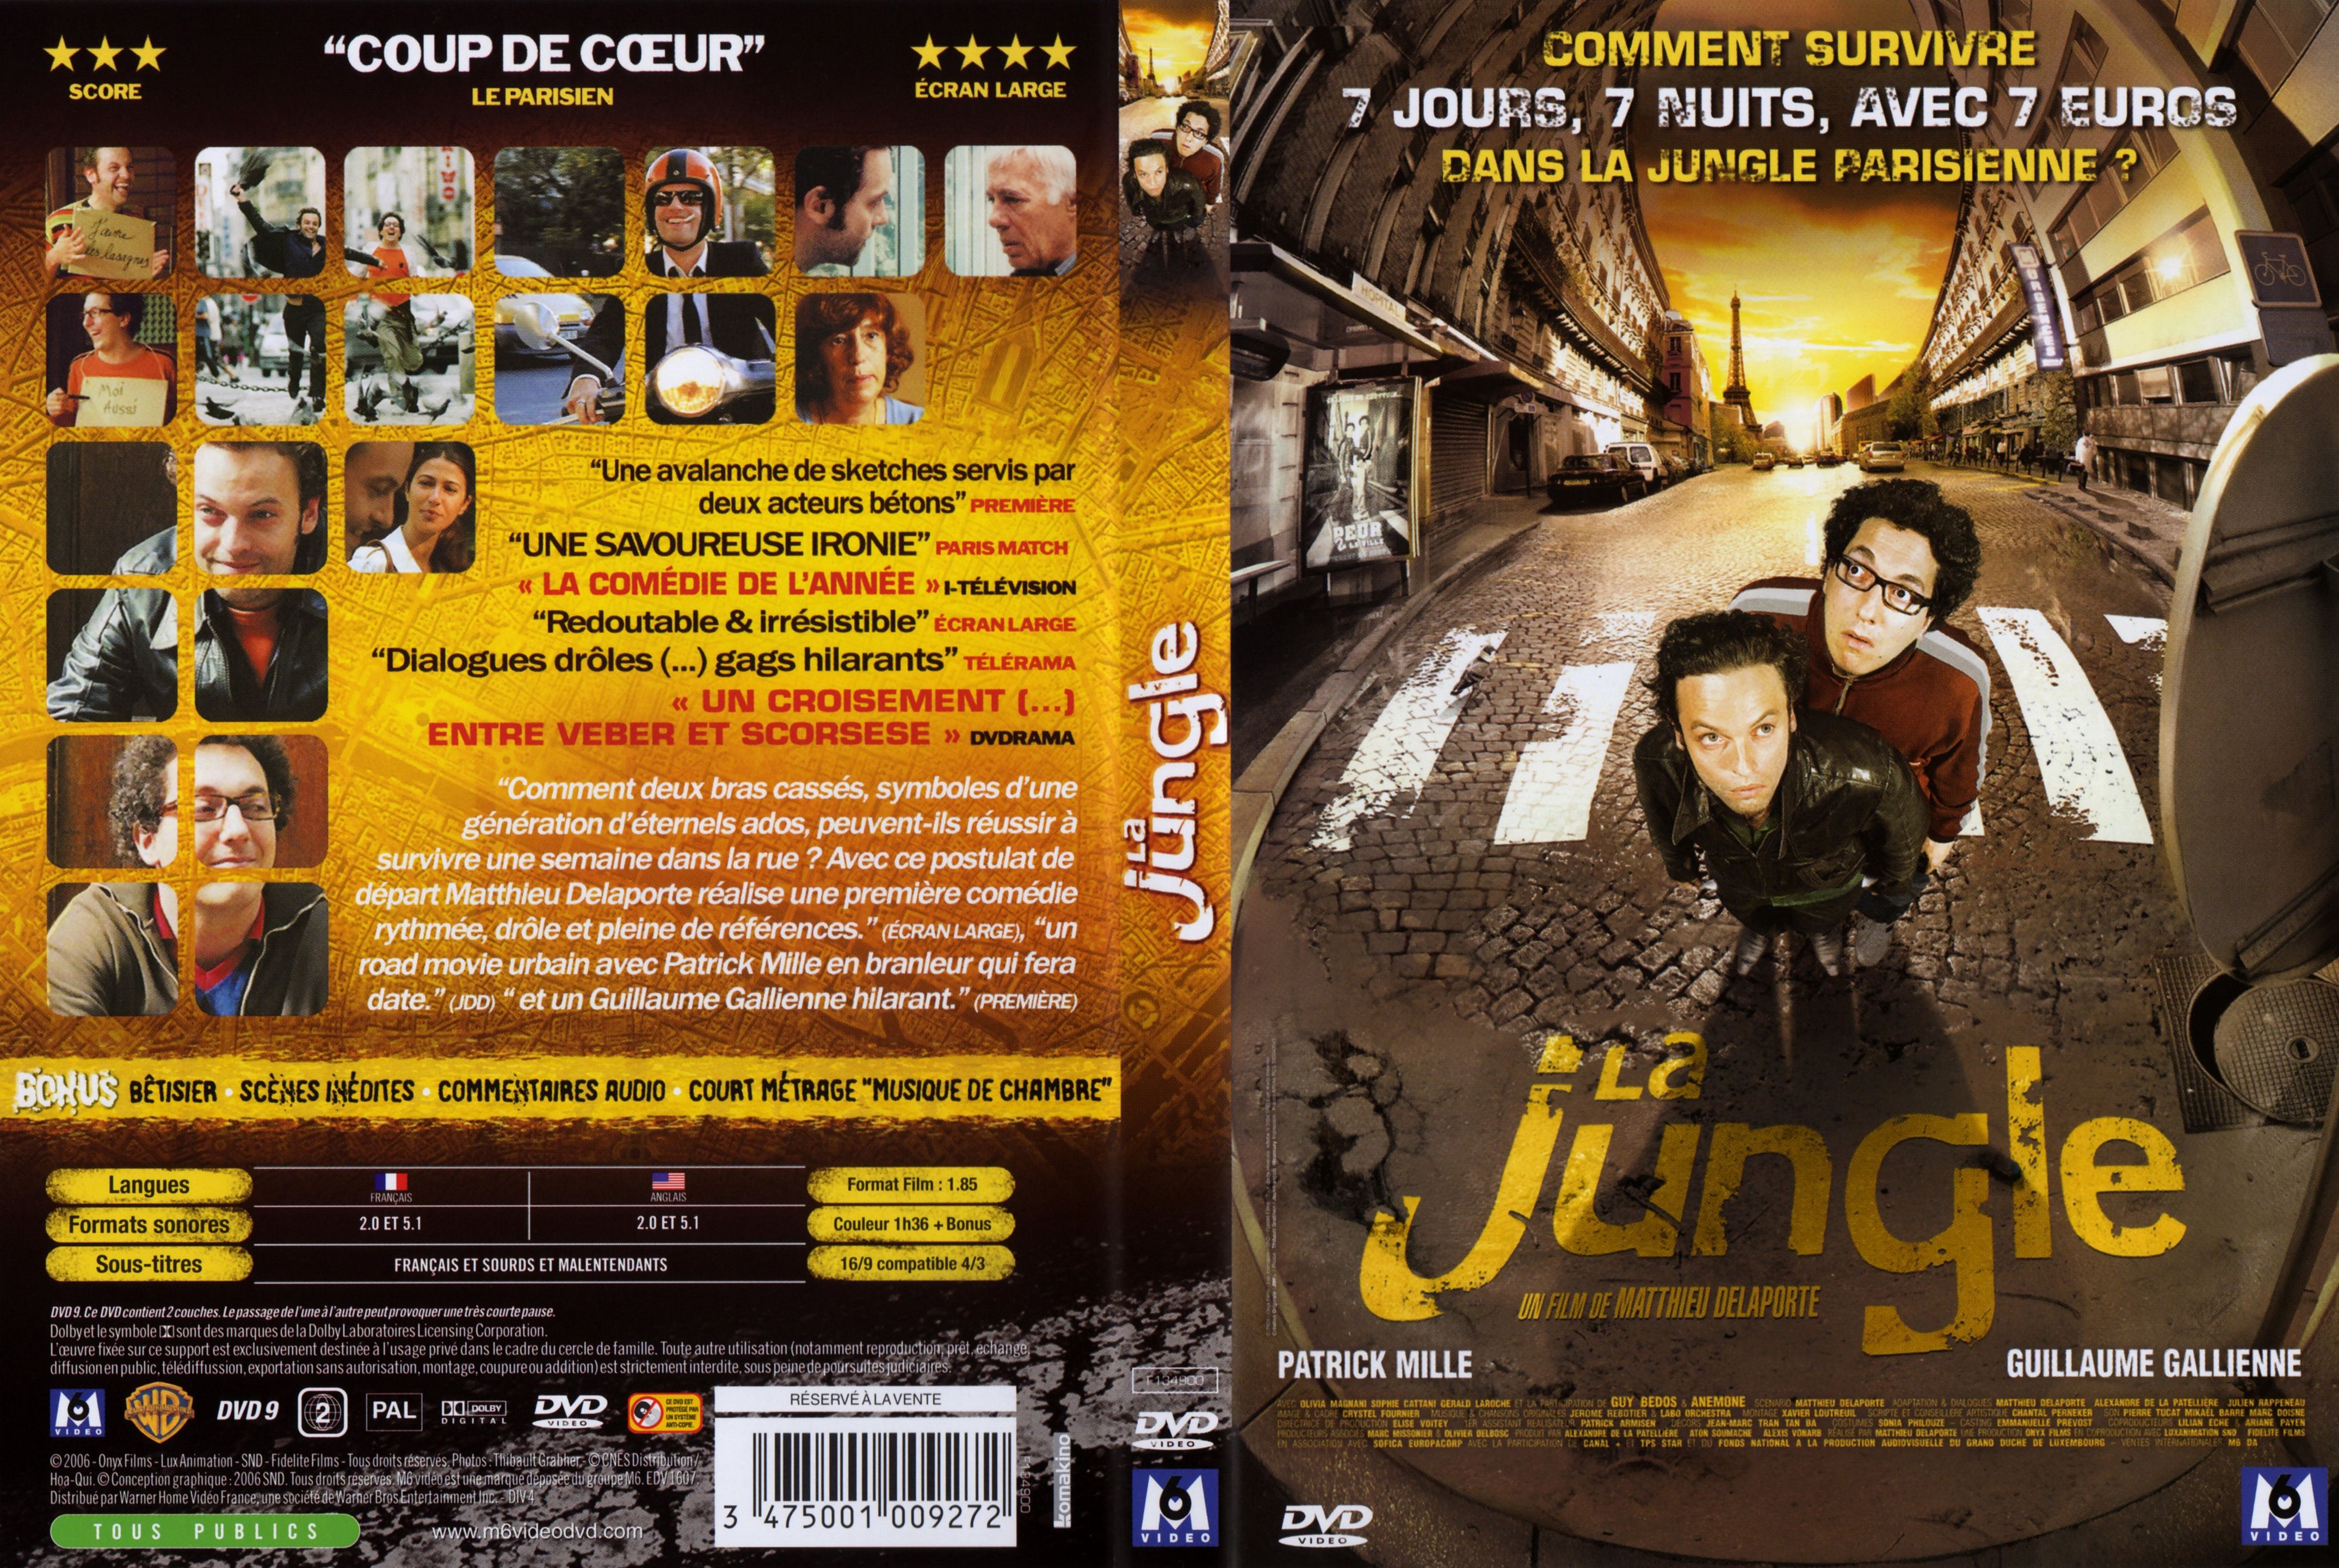 Jaquette DVD La jungle